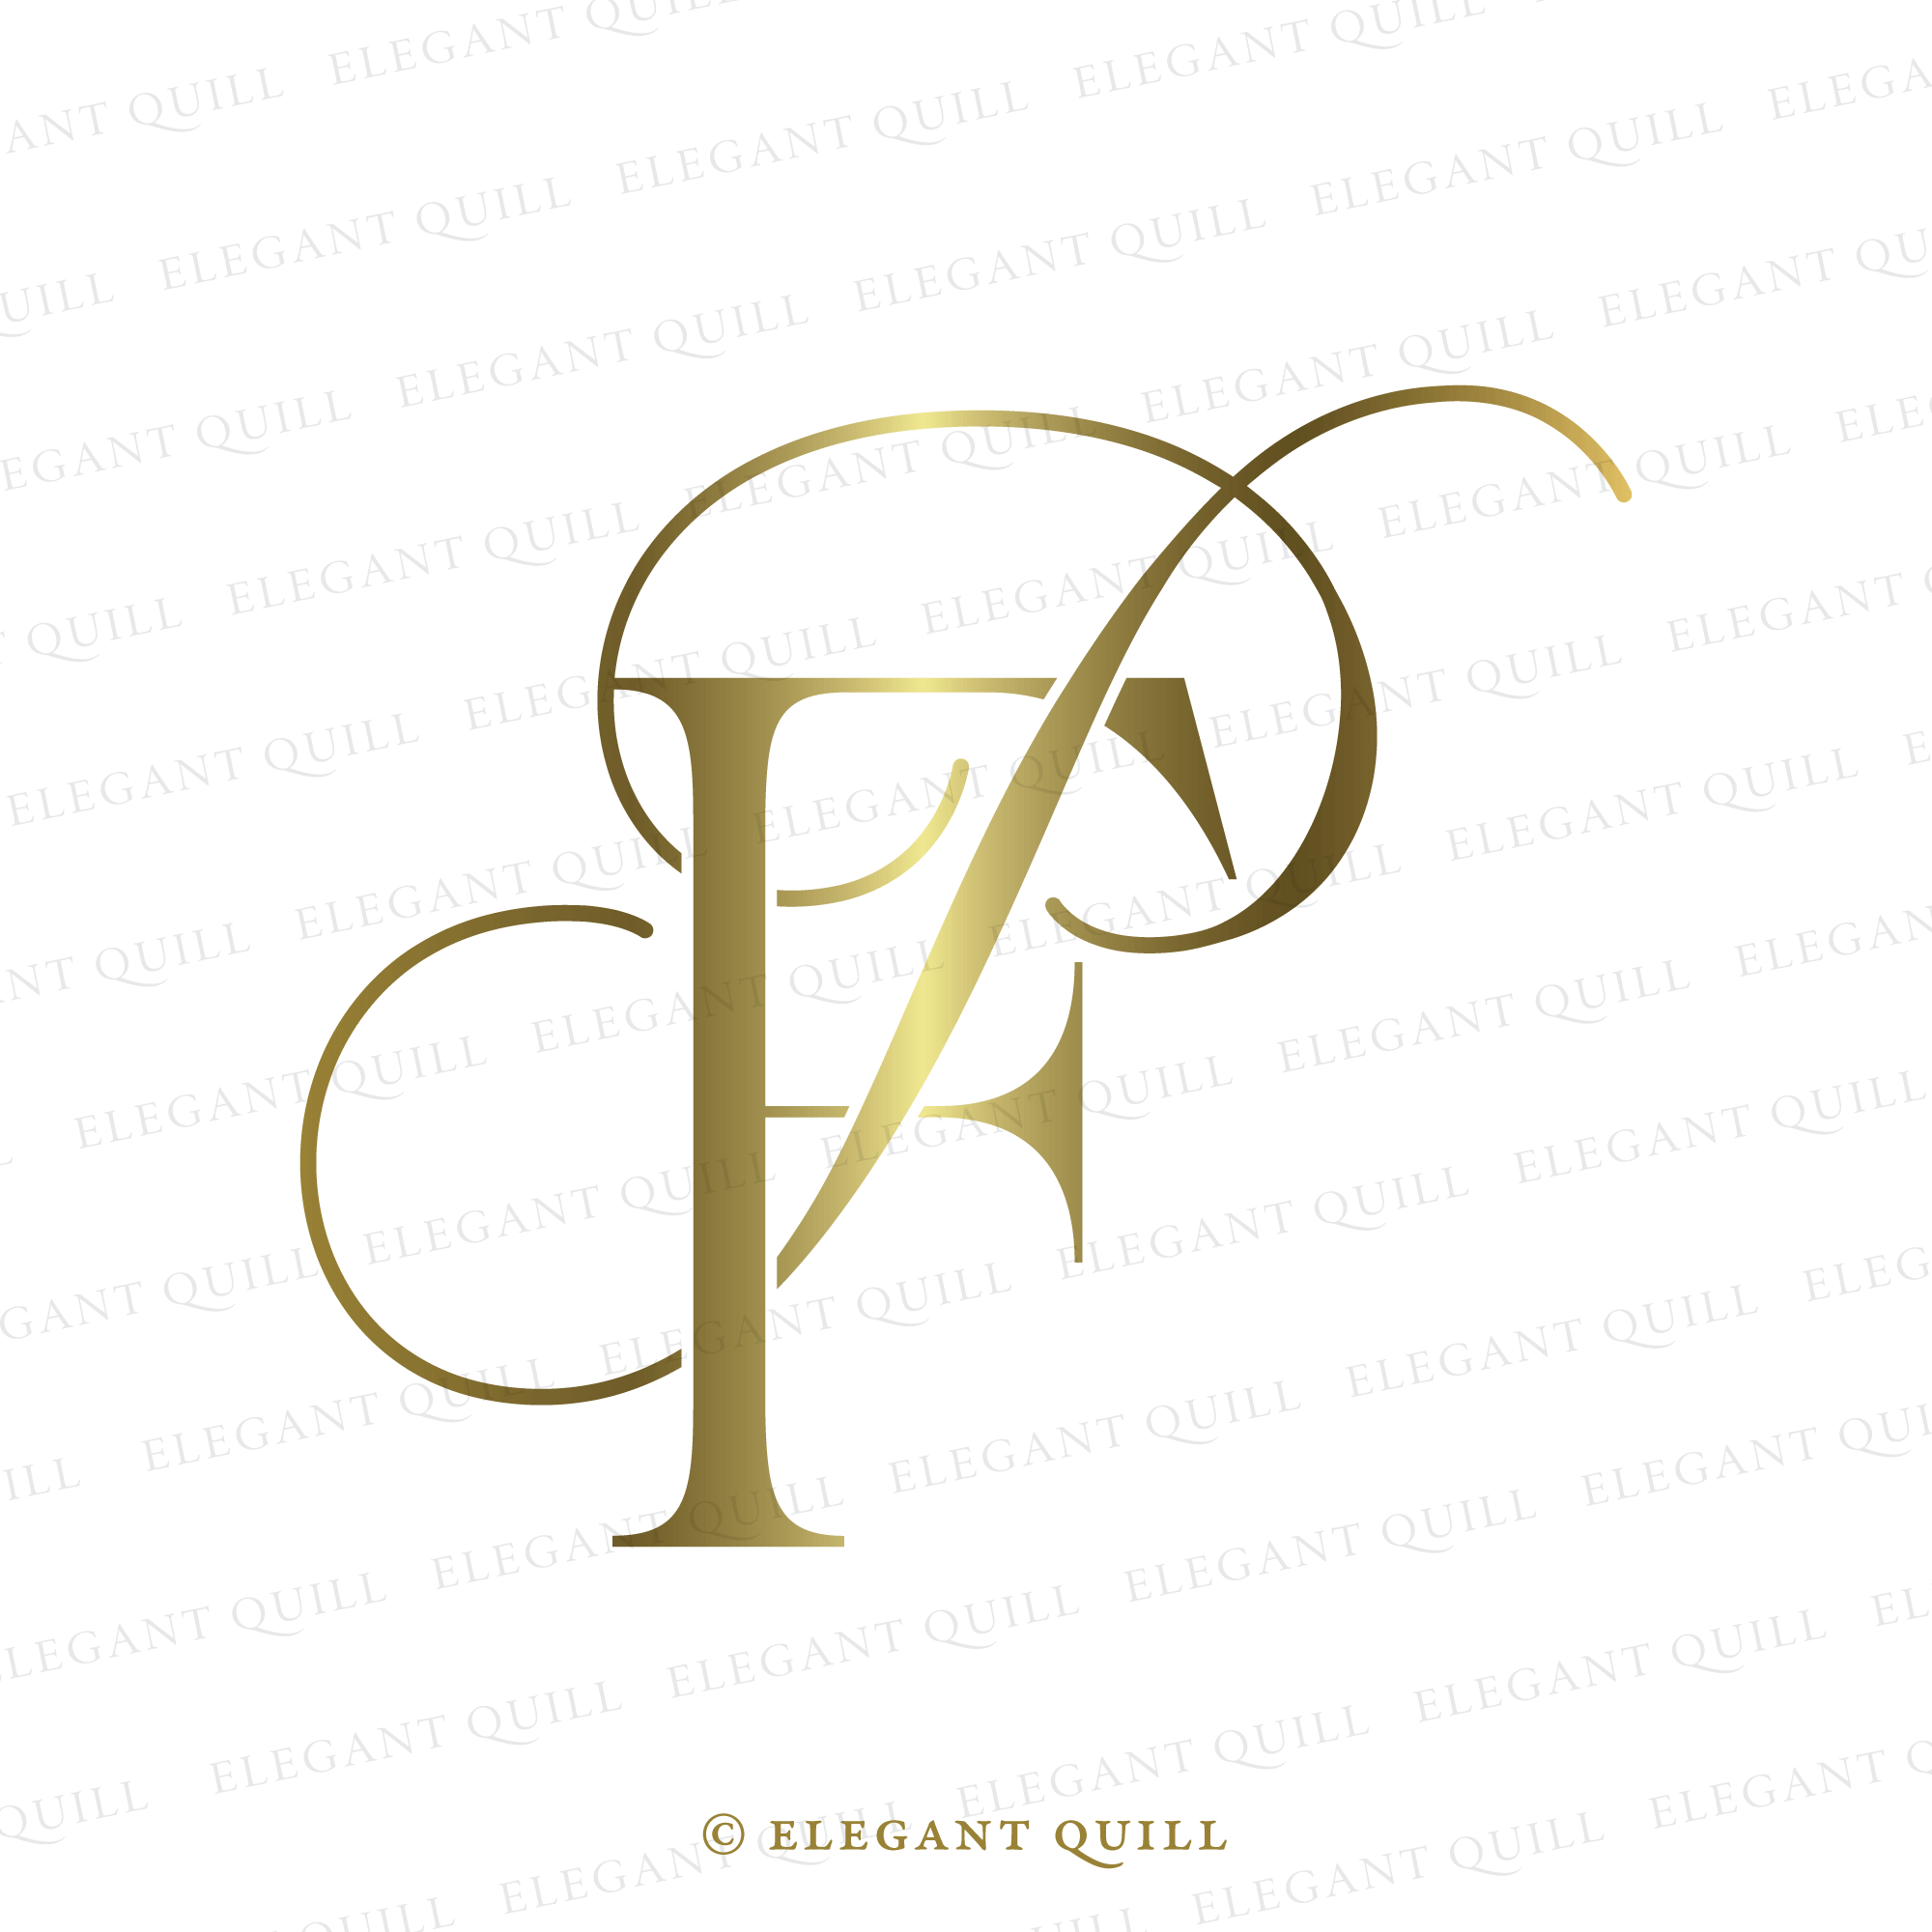 100,000 Pf logo Vector Images | Depositphotos